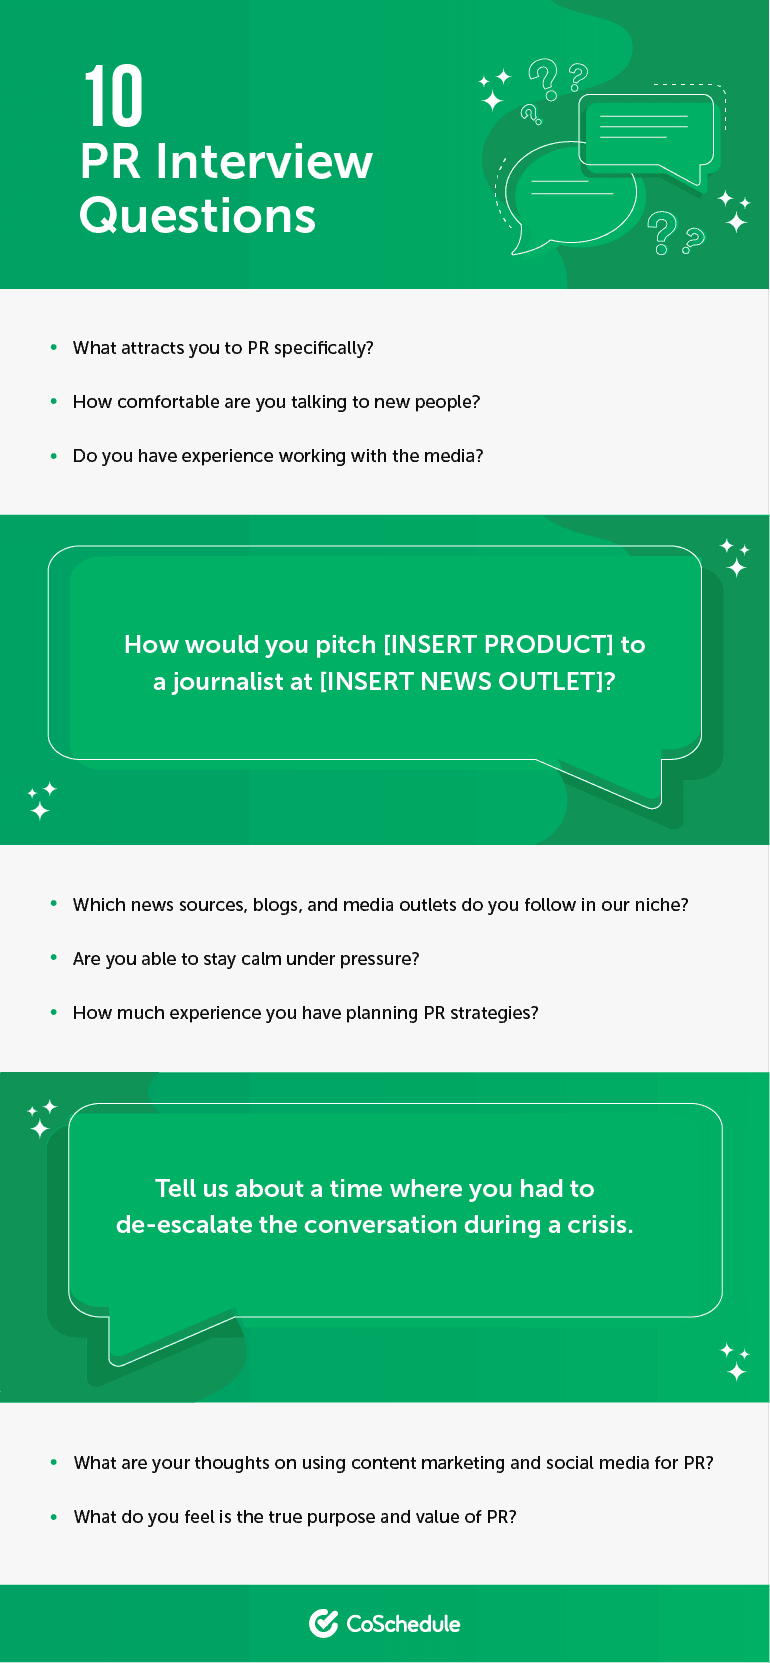 List of 10 PR Interview Questions.